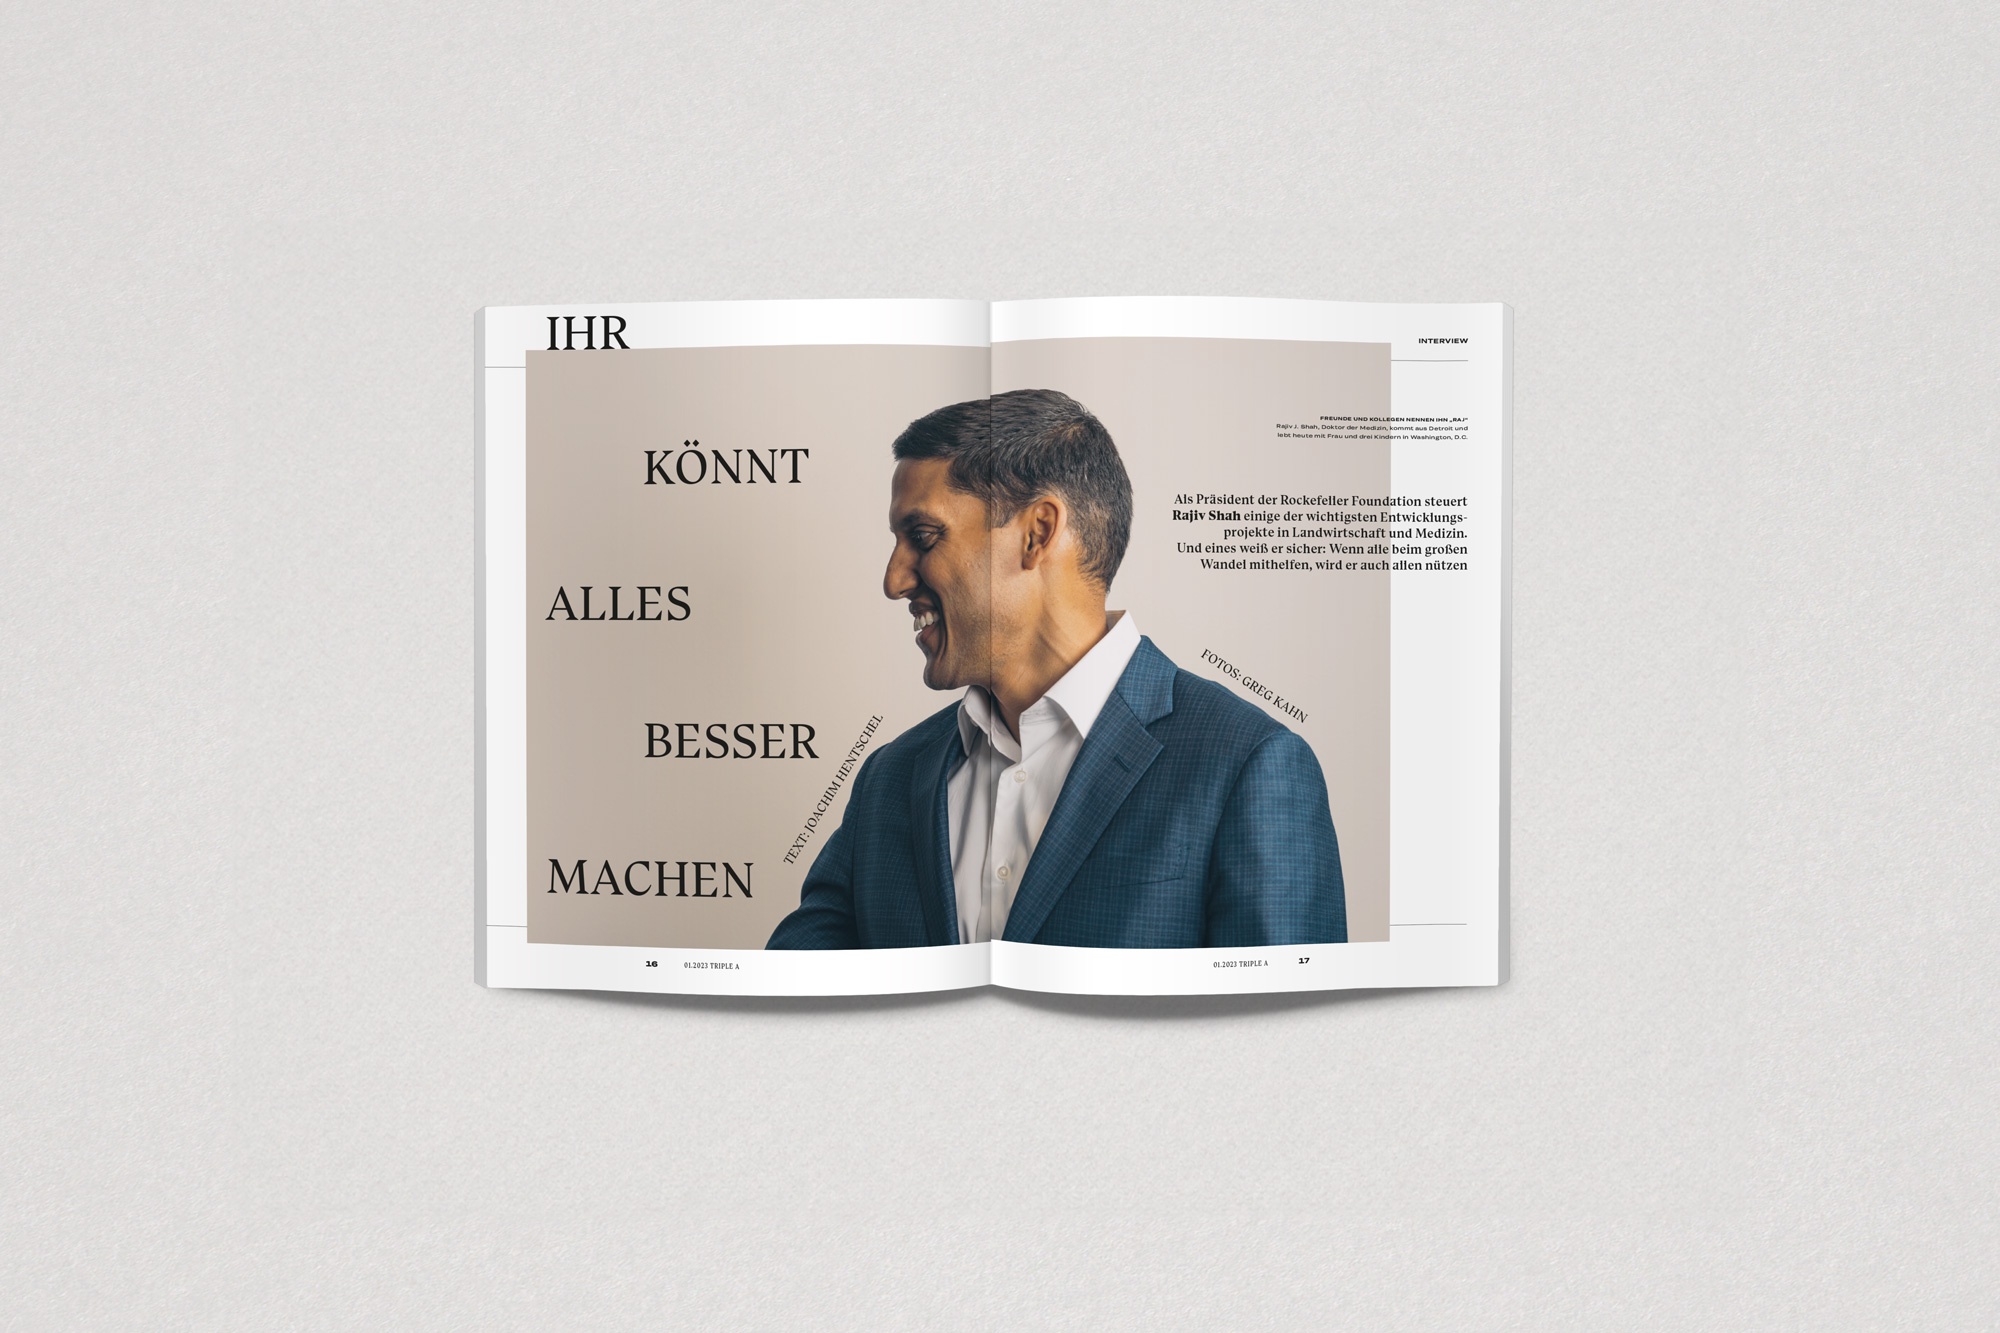 Stuttgarter Zeitung magazine economy TripleA layout photography by Greg Kahn